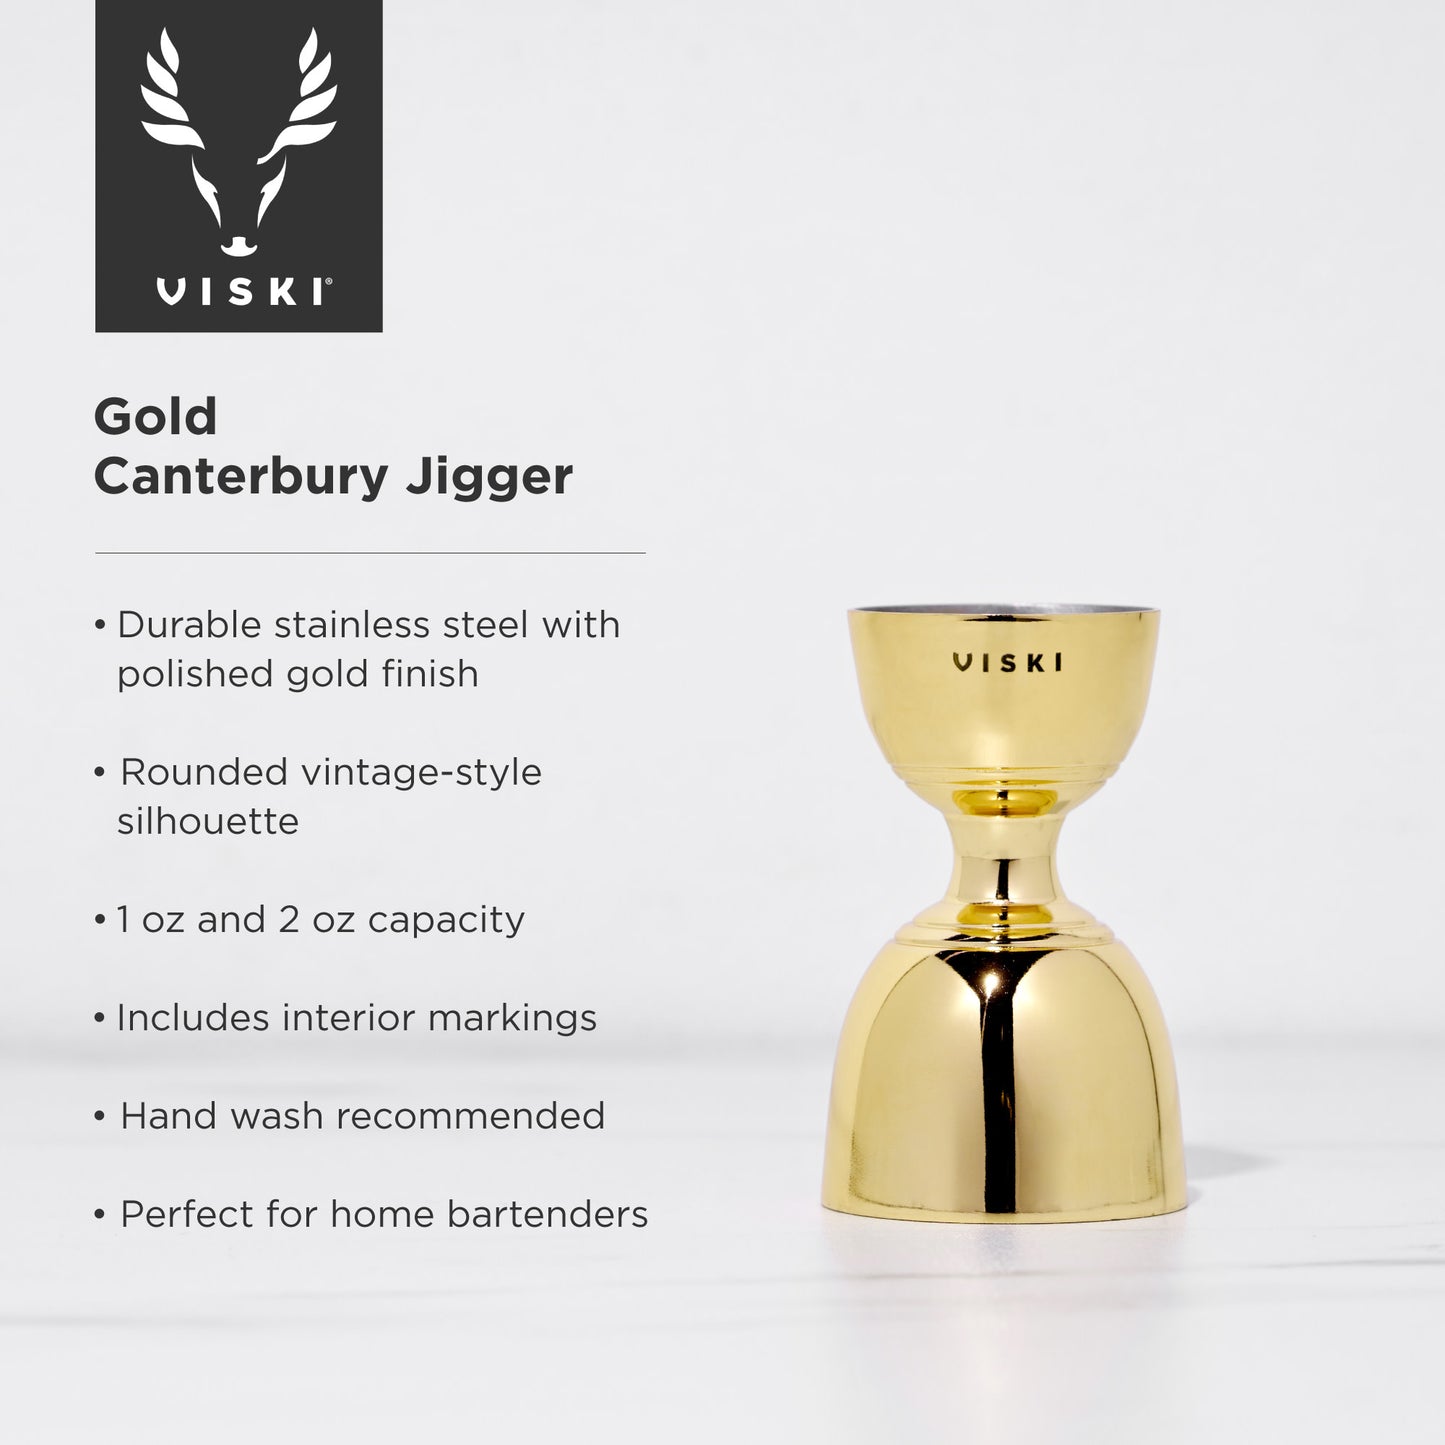 Gold Canterbury Jigger